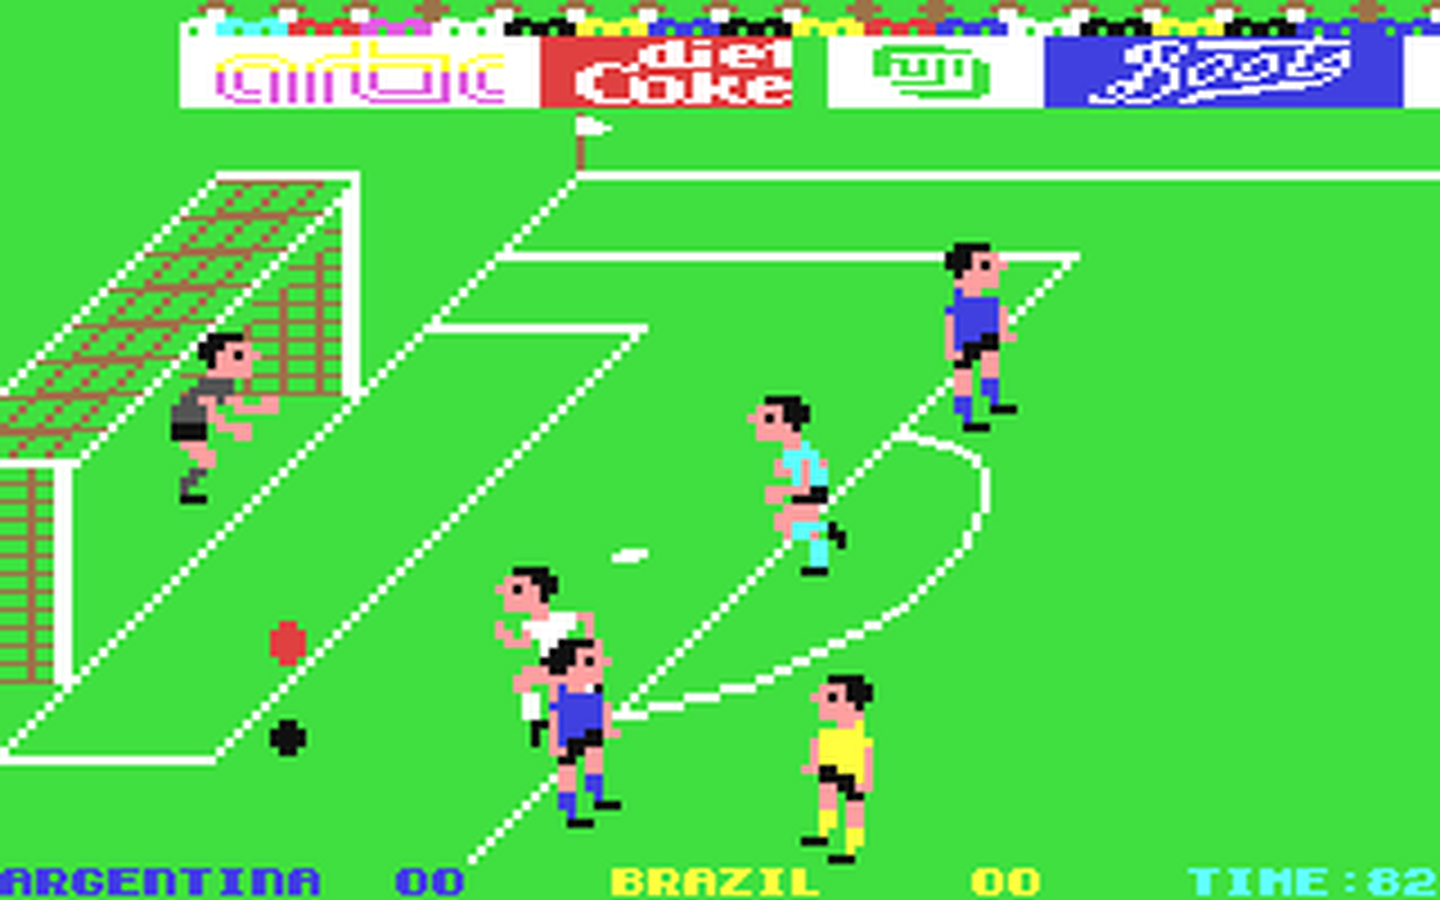 C64 GameBase World_Cup Artic_Computing_Ltd. 1985